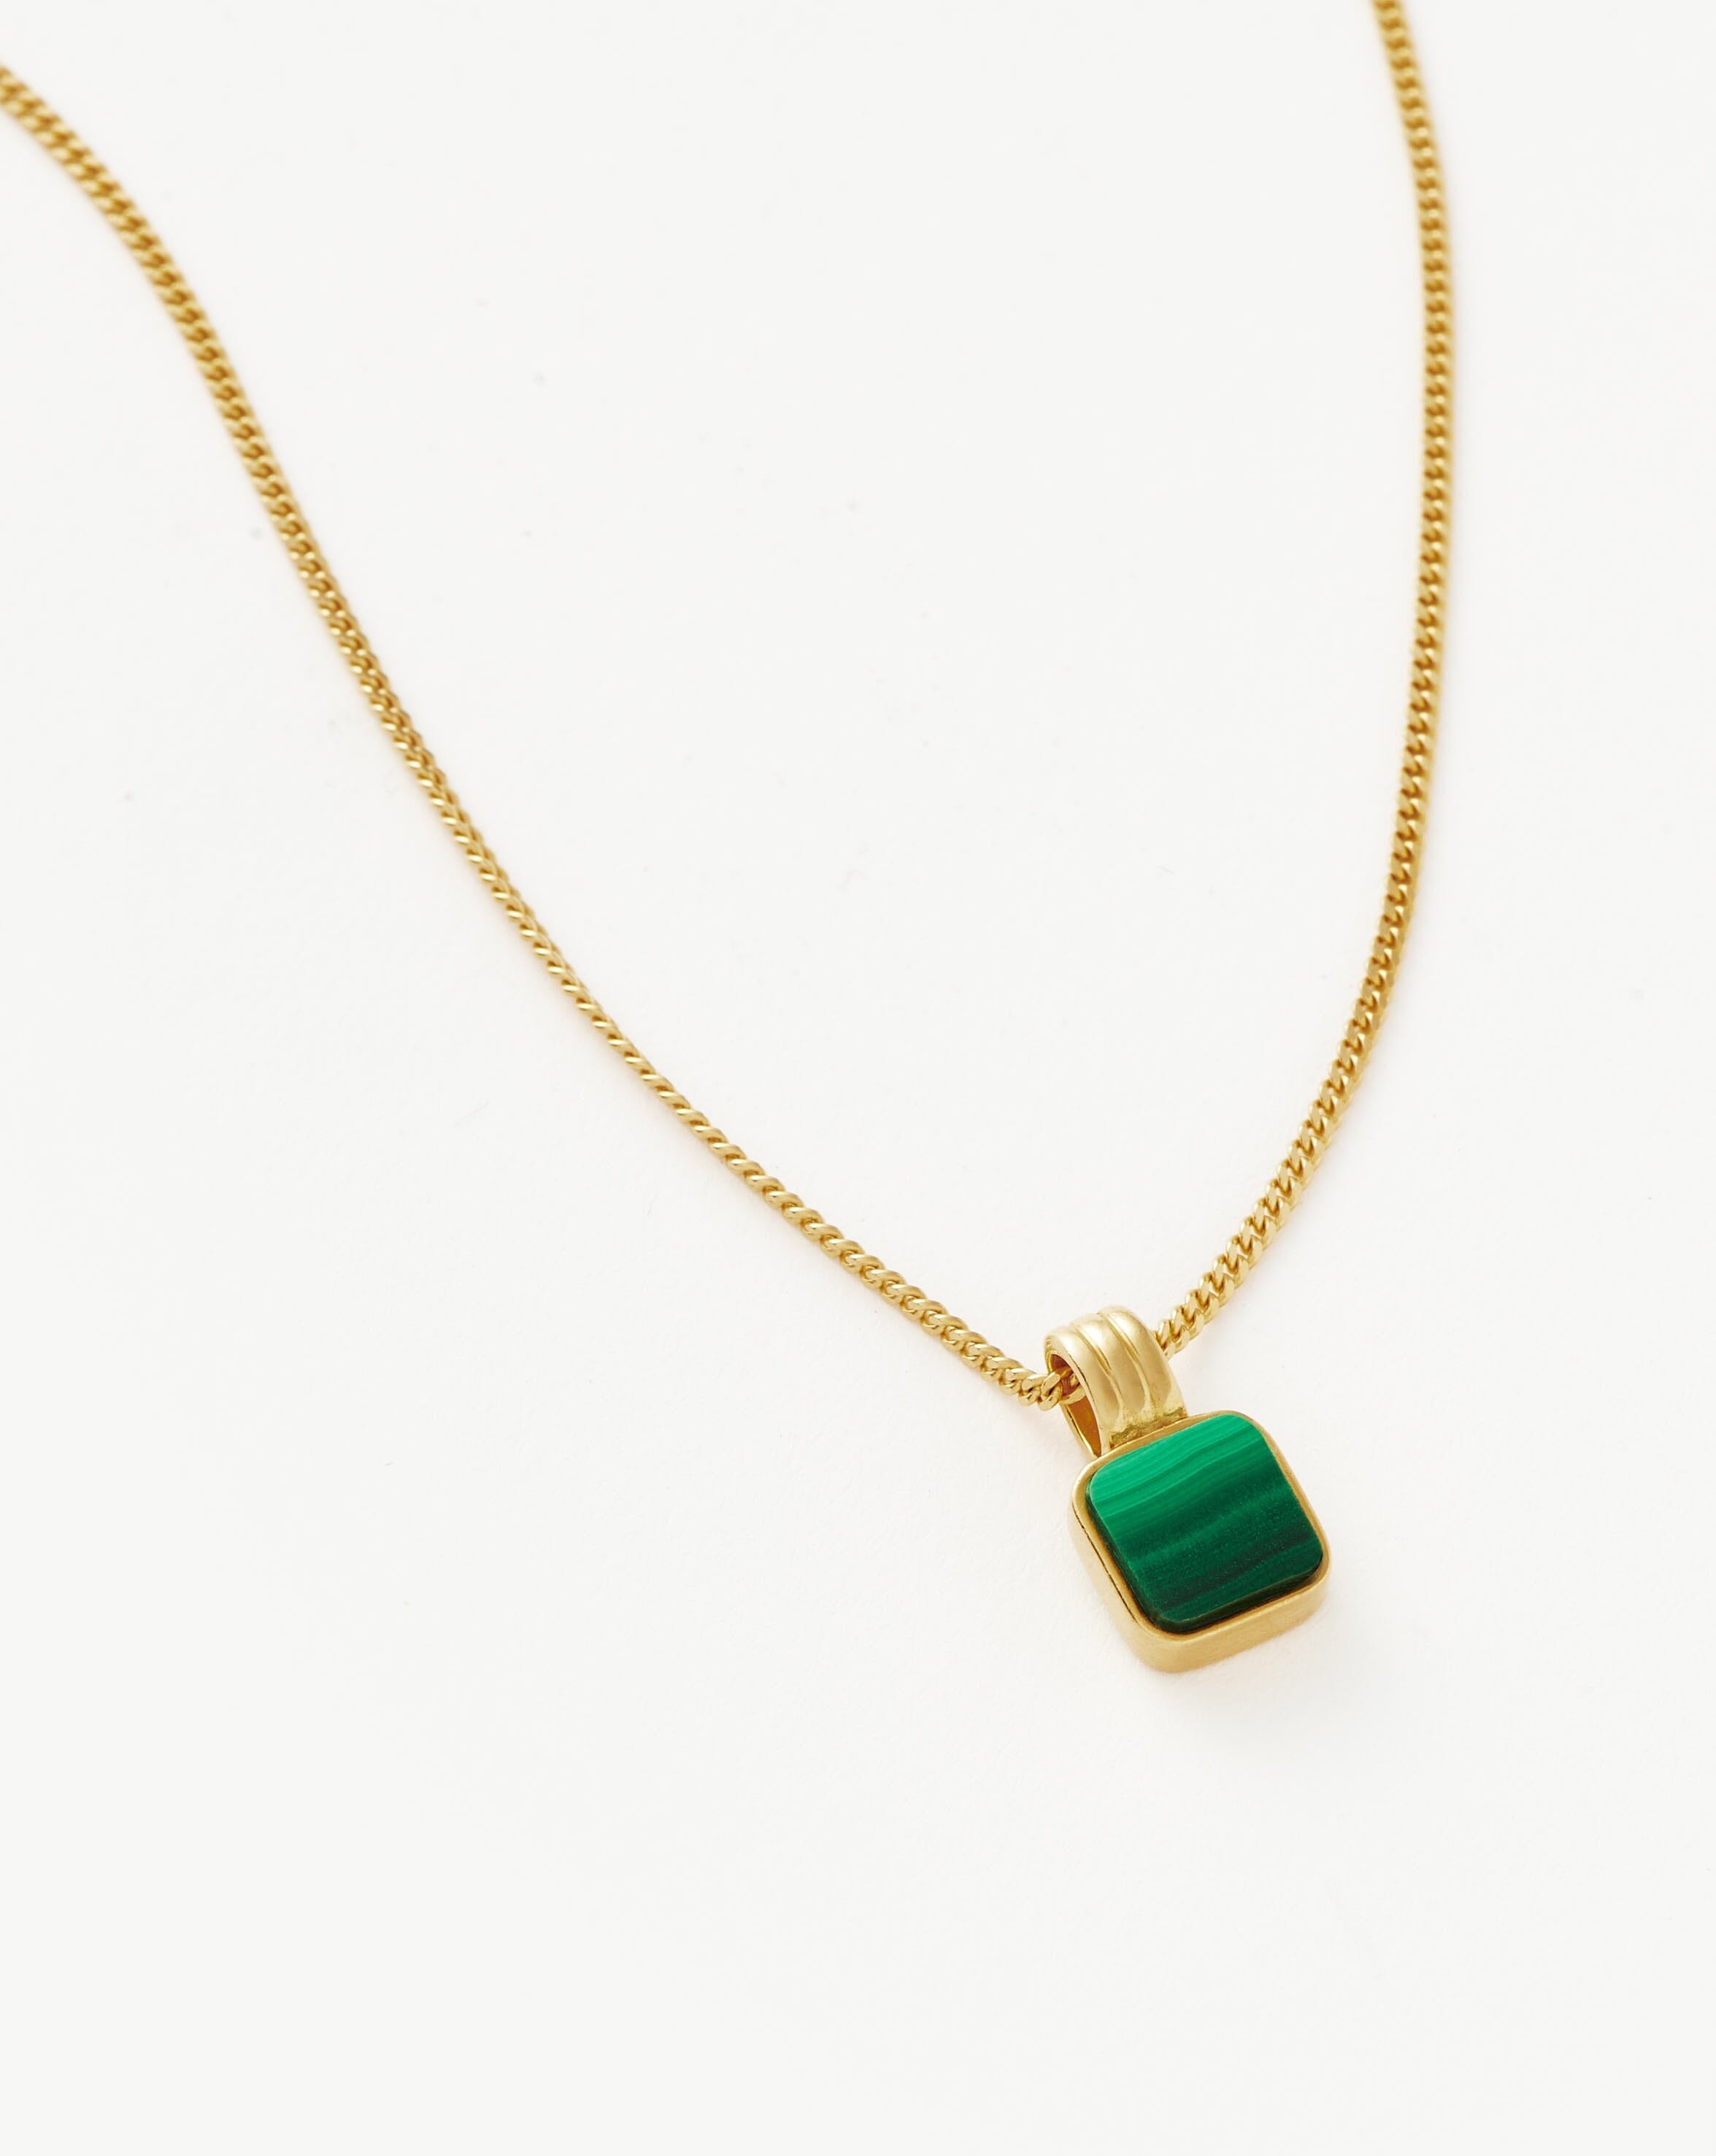 Men's Malachite Gold Chain Layered Necklace Sets | Amazon.com